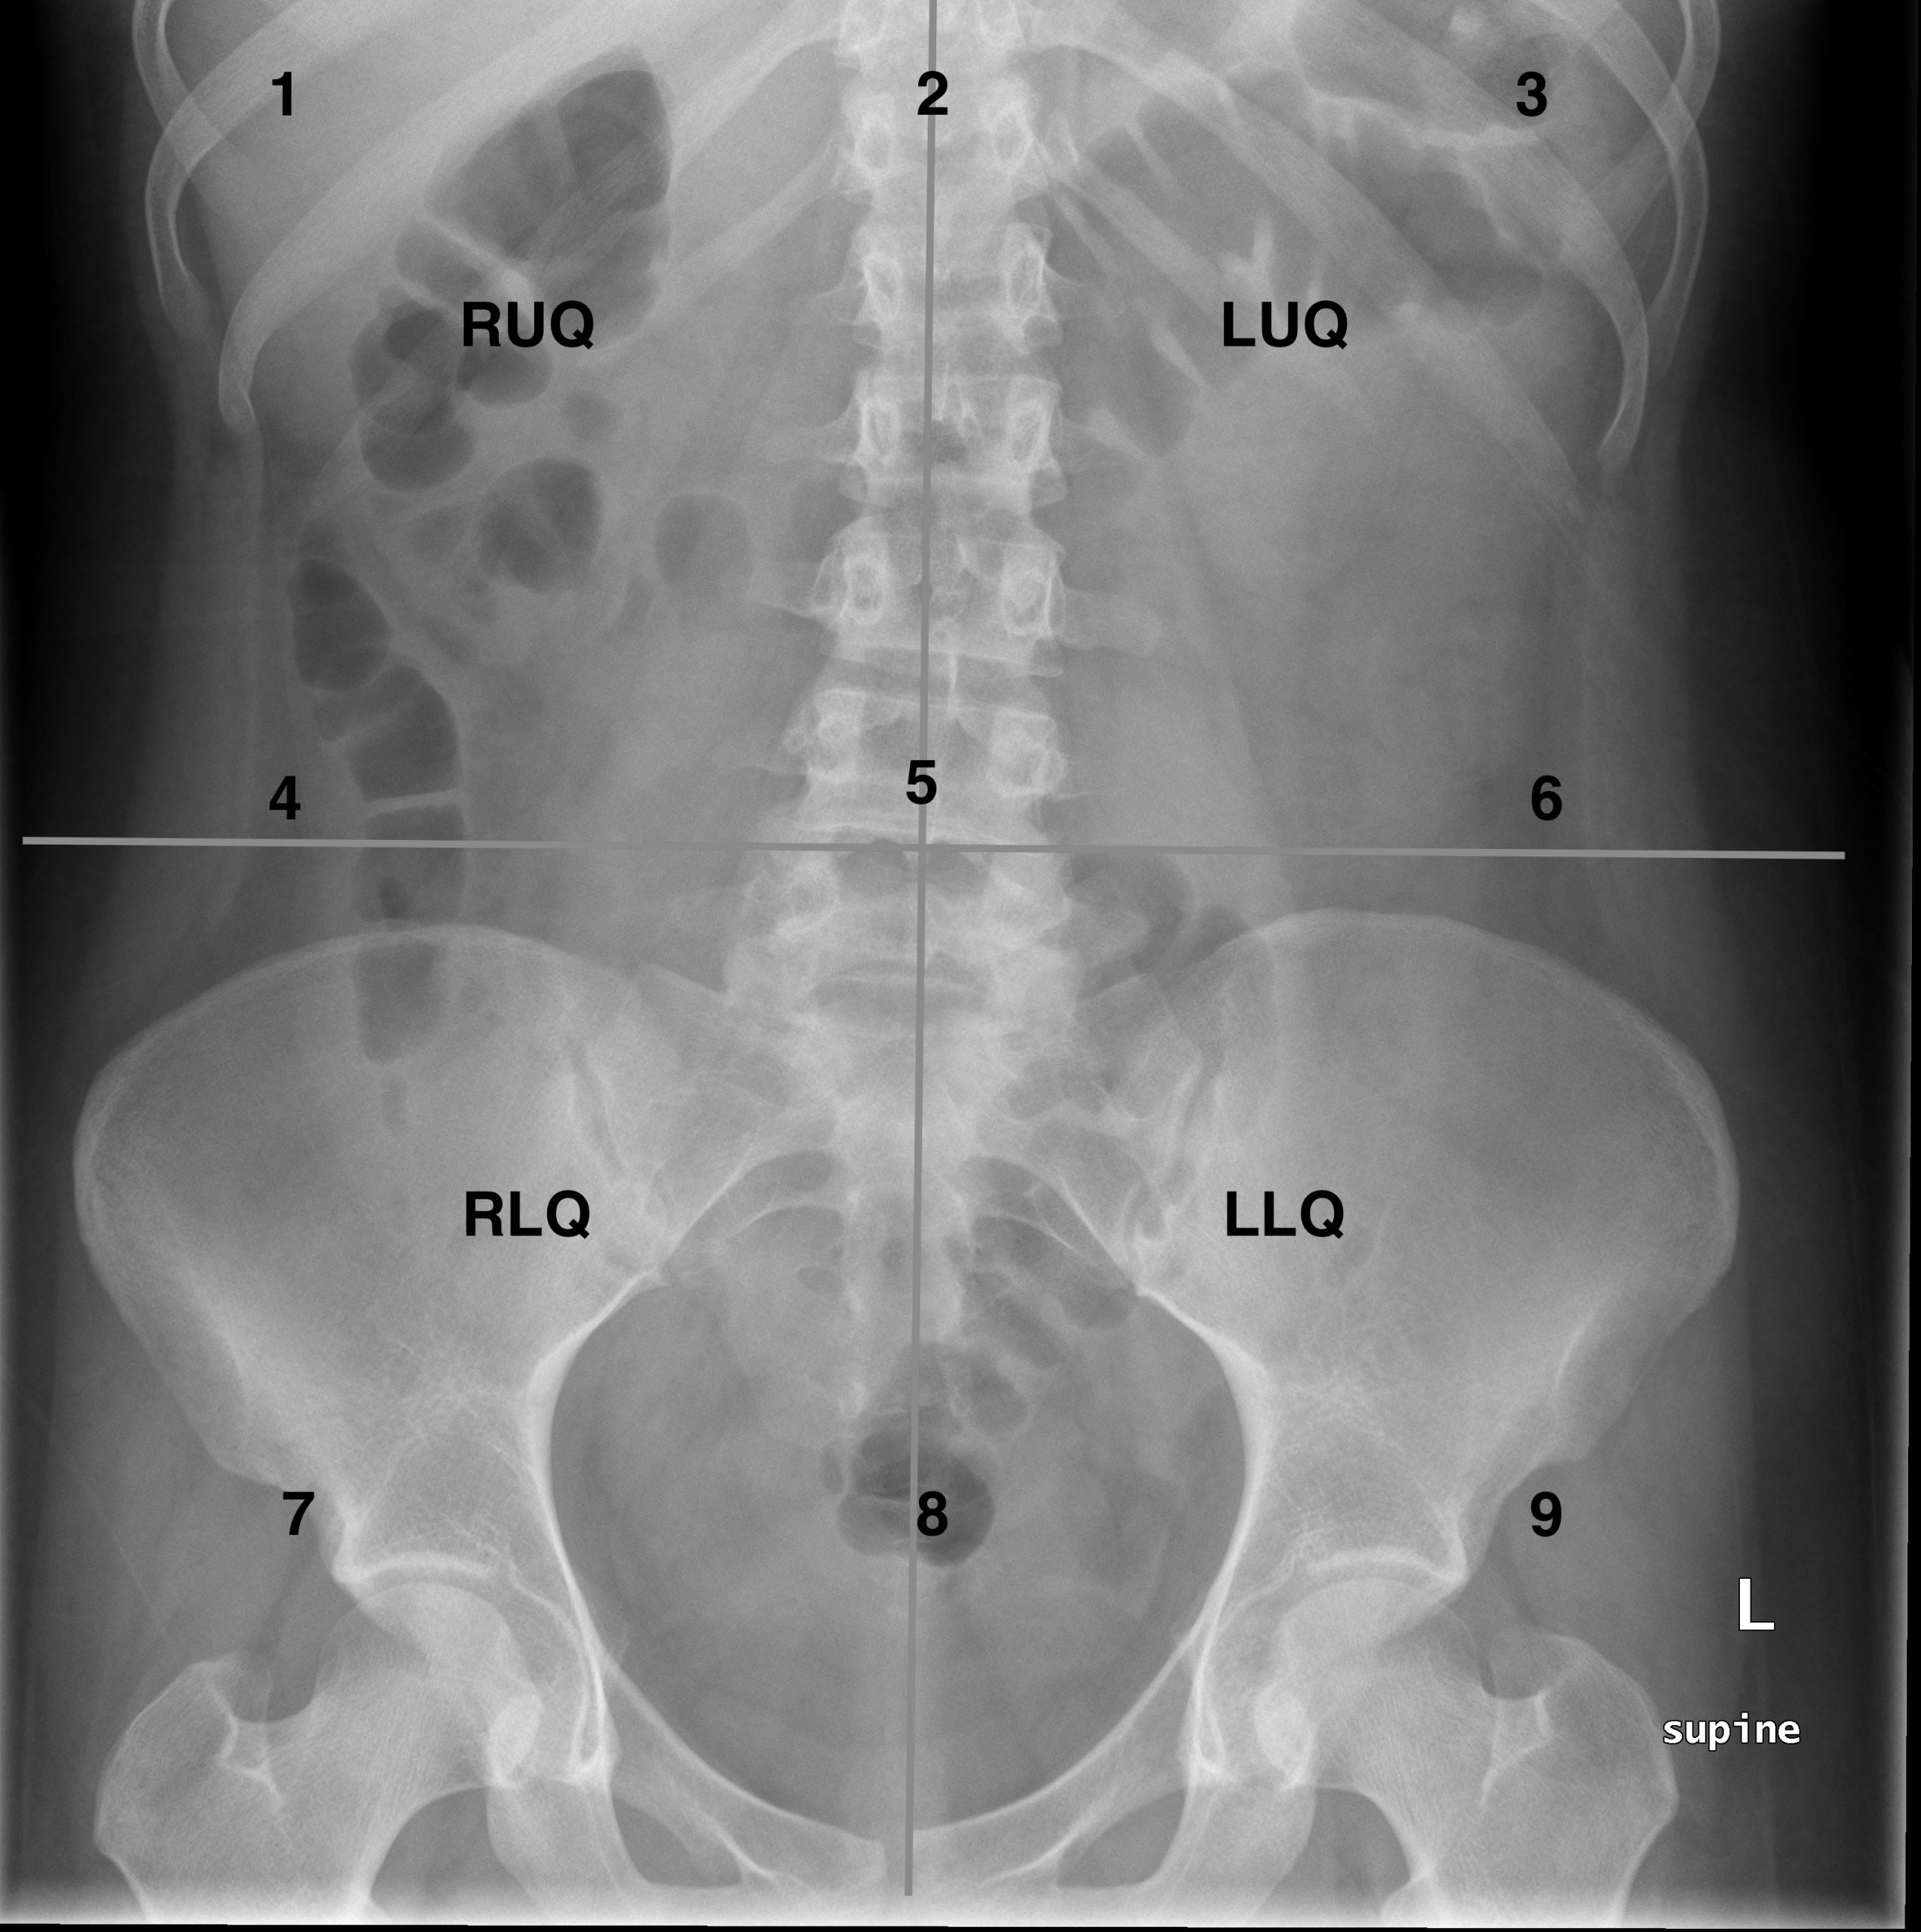 normal abdominal x ray